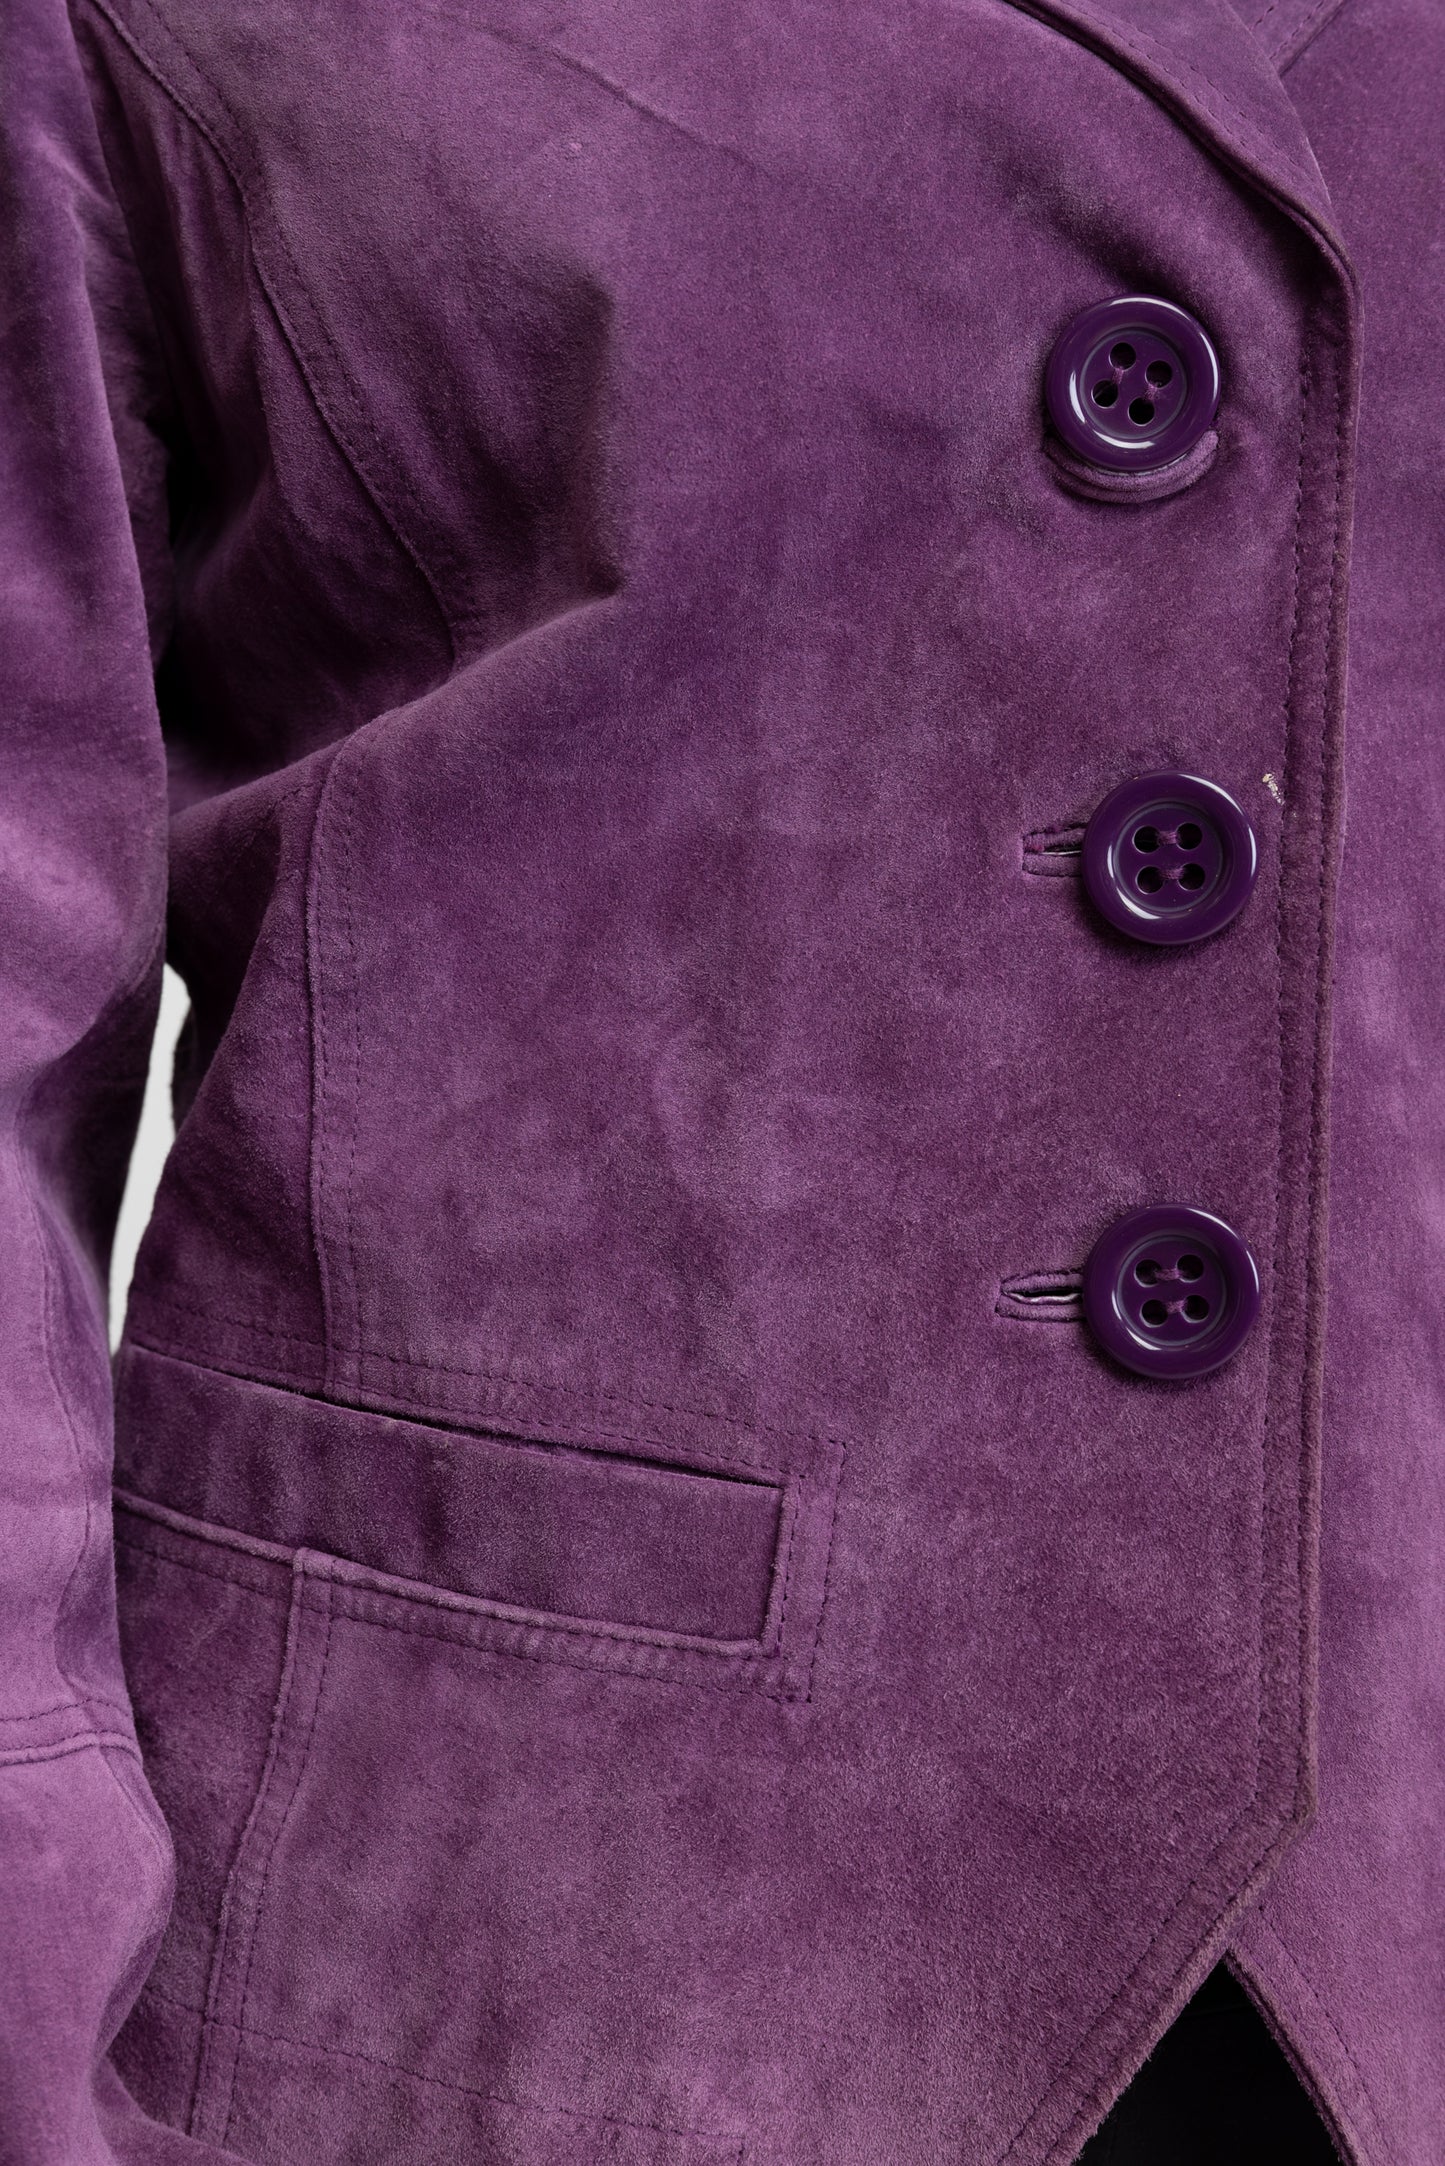 1970's Purple Suede Jacket M